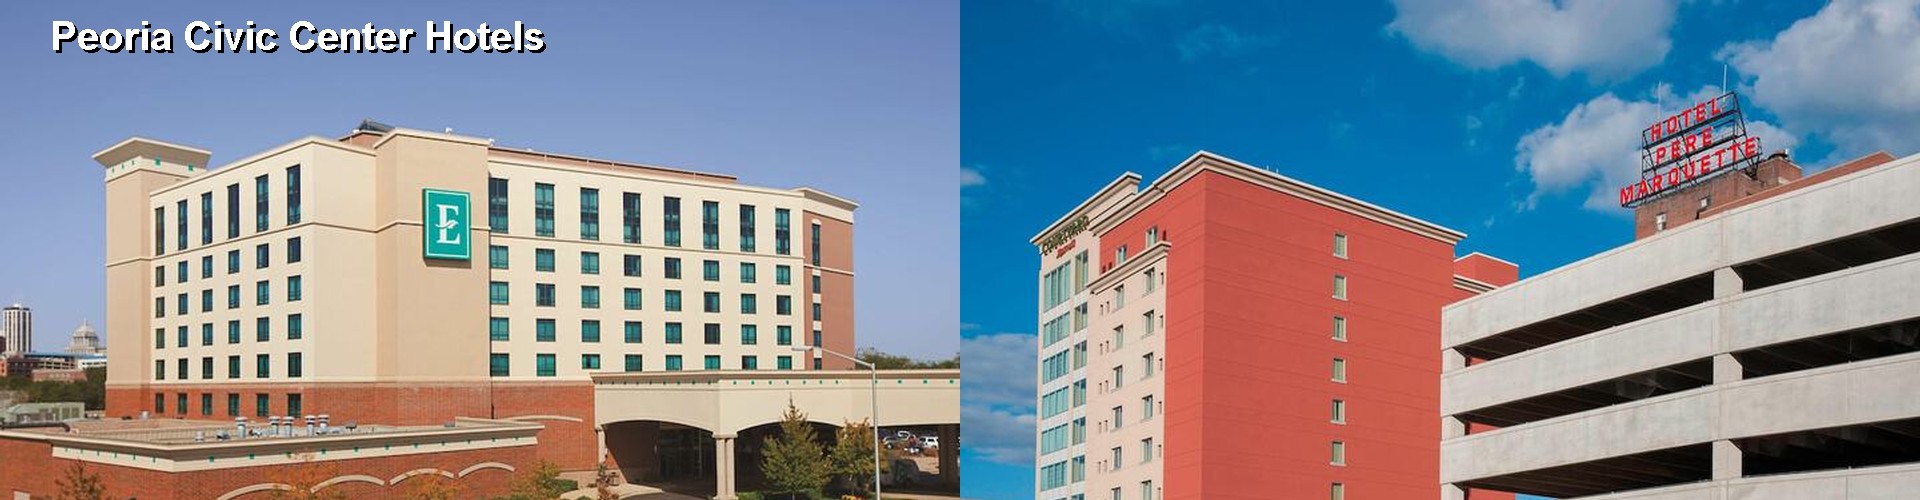 5 Best Hotels near Peoria Civic Center